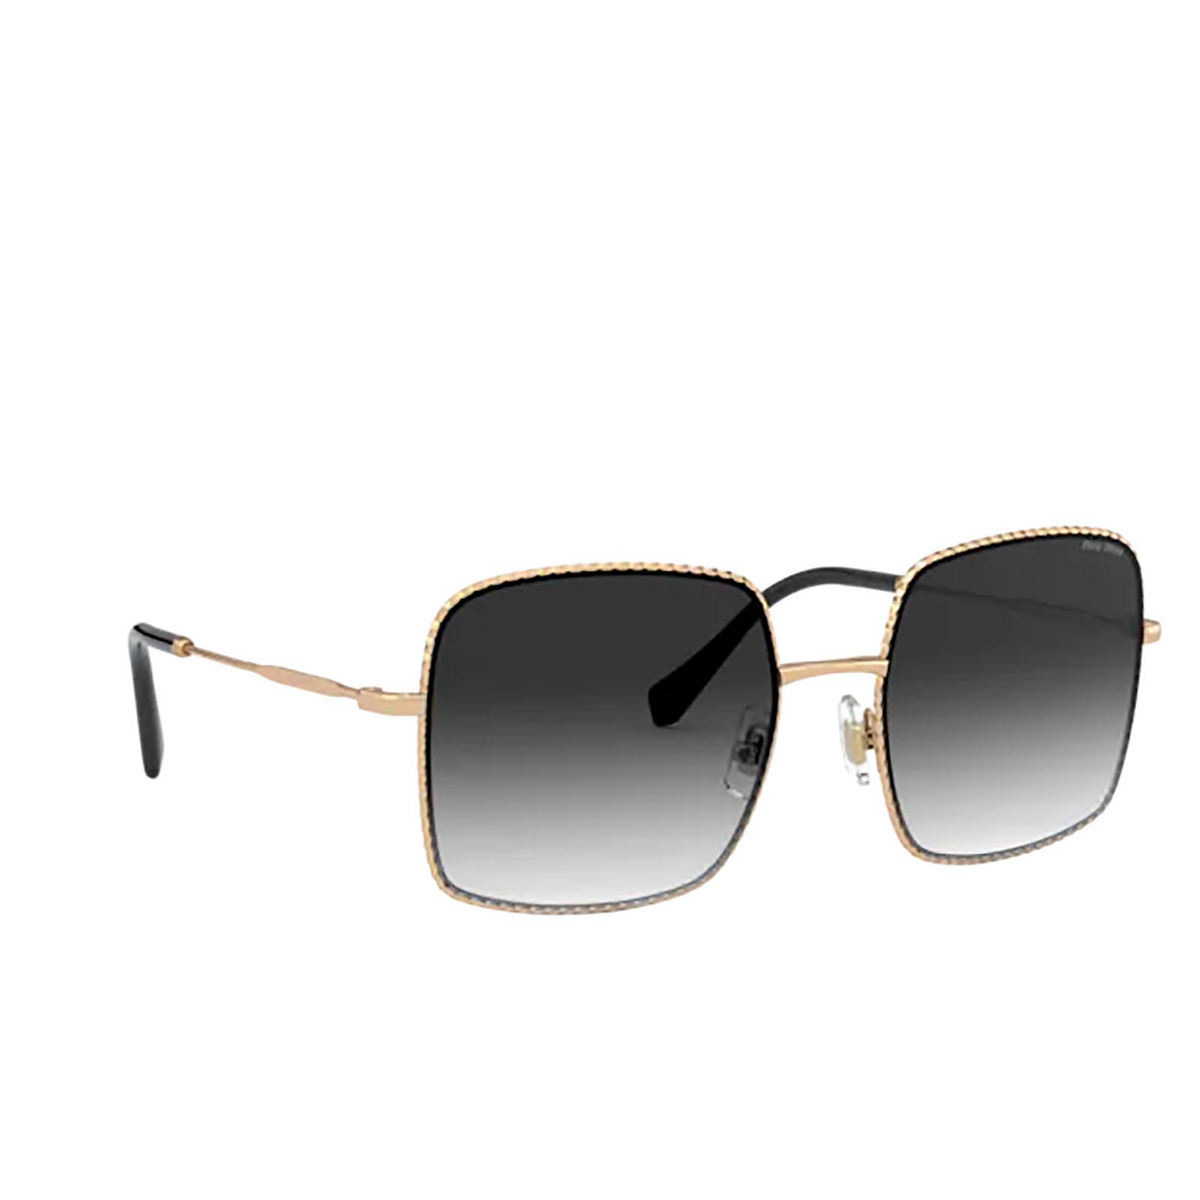 Miu Miu® Square Sunglasses: MU 61VS color Antique Gold 7OE5D1 - three-quarters view.